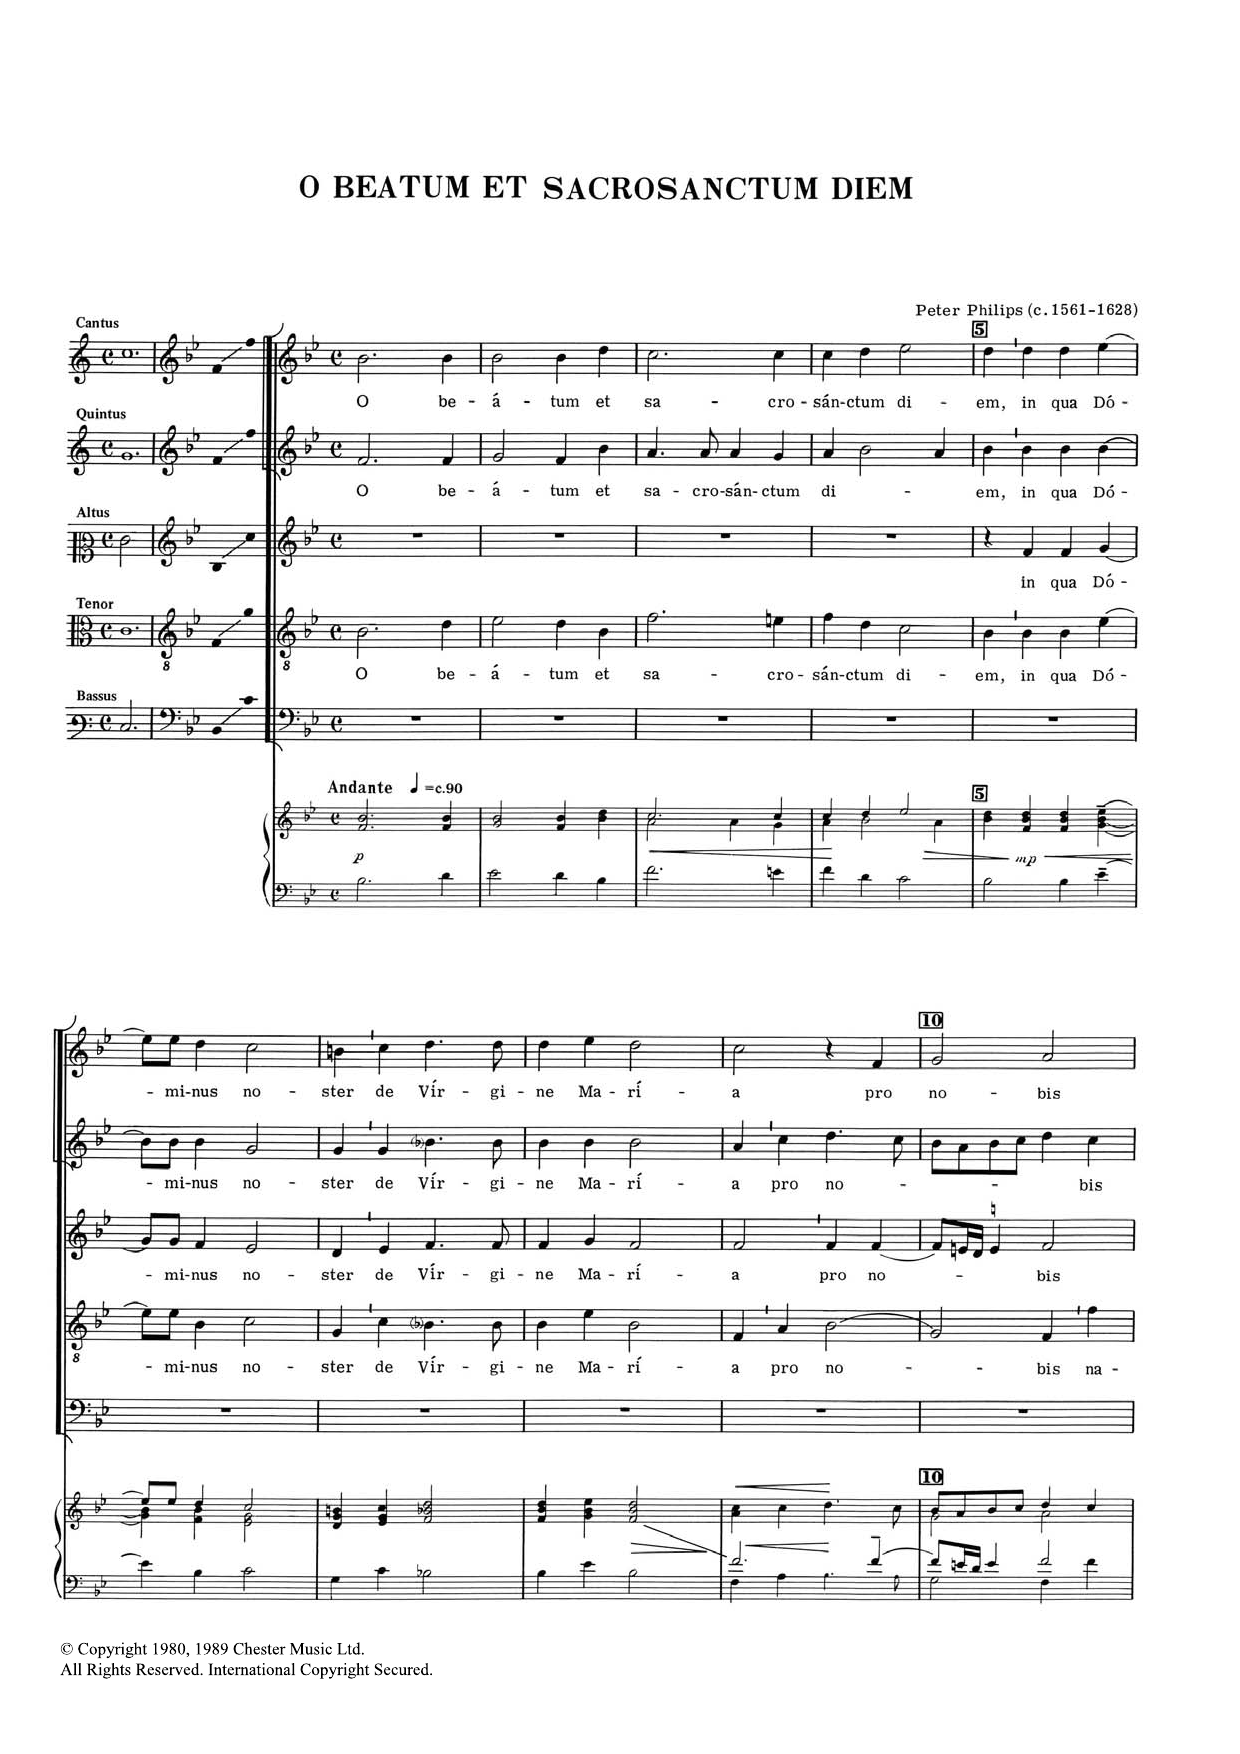 Peter Philips O Beatum Et Sacrosanctum Diem sheet music notes and chords arranged for SATB Choir